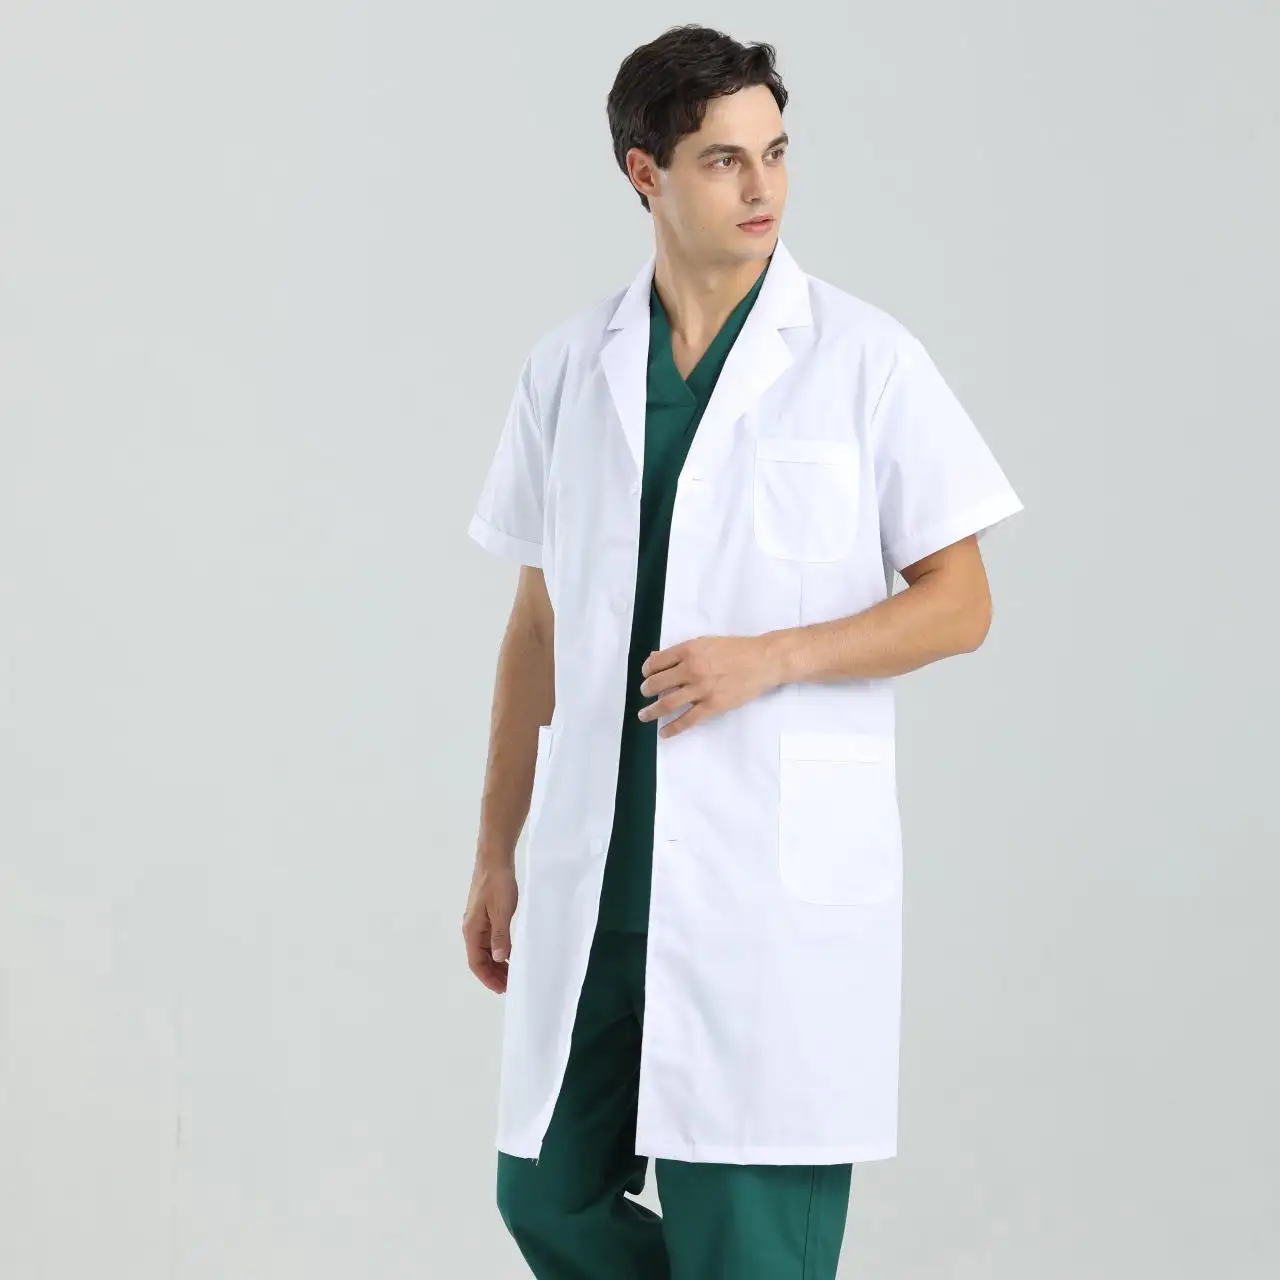 Women nurse uniforms medical designs white uniforms women doctor white lab coat